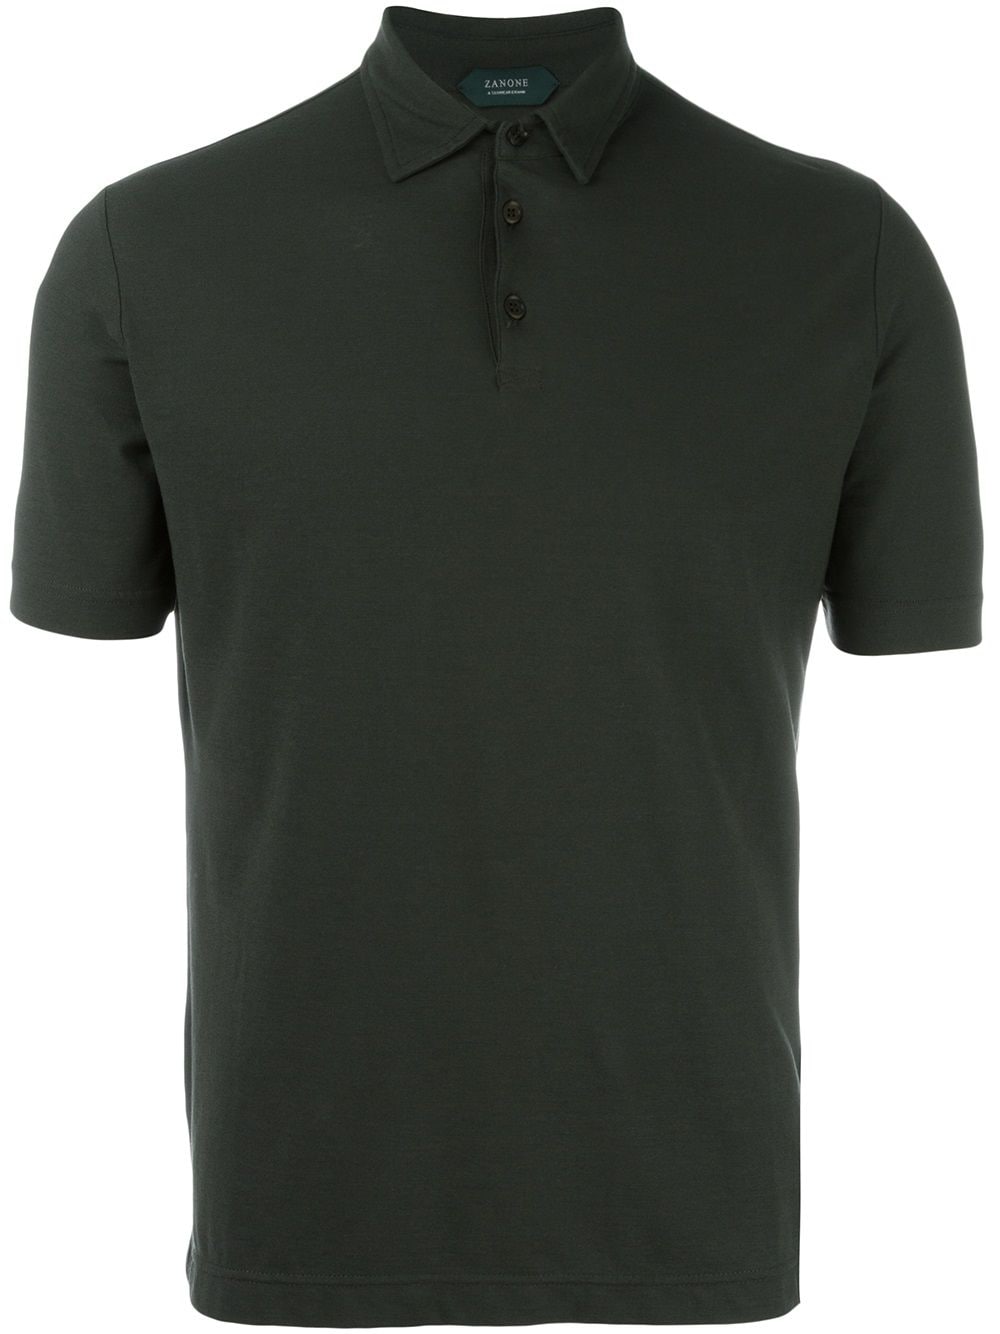 Zanone shortsleeved fitted polo shirt - Green von Zanone